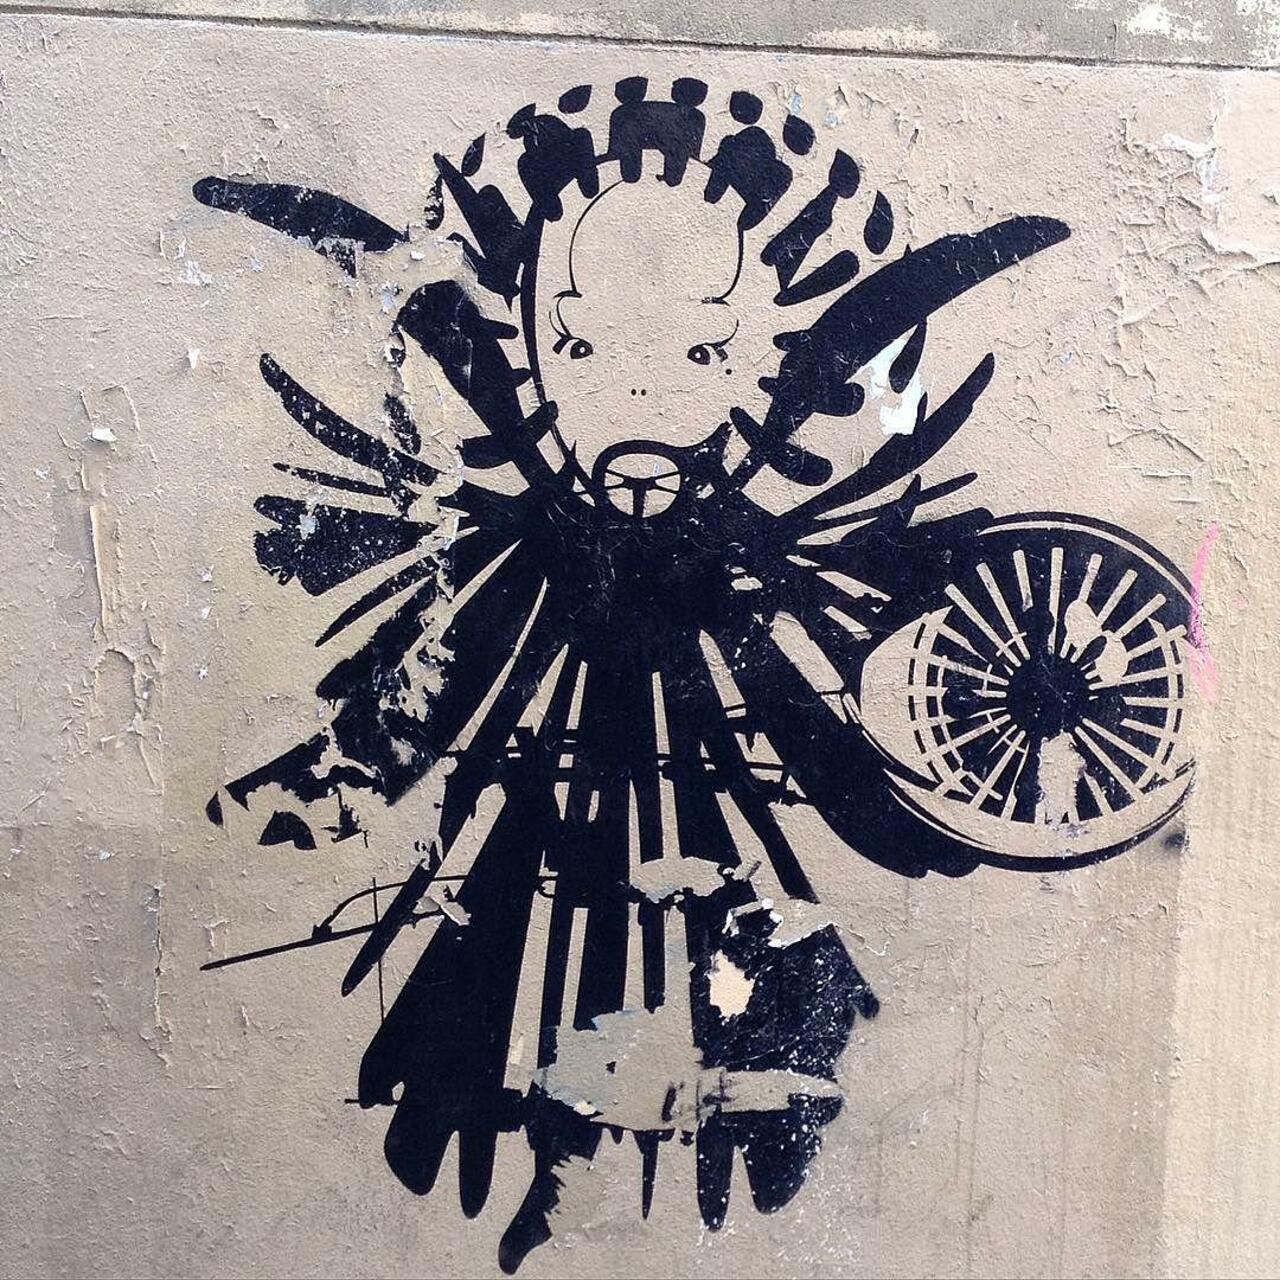 #Paris #graffiti photo by @vgsman http://ift.tt/1FUdyFN #StreetArt http://t.co/gGl2sS8TdC